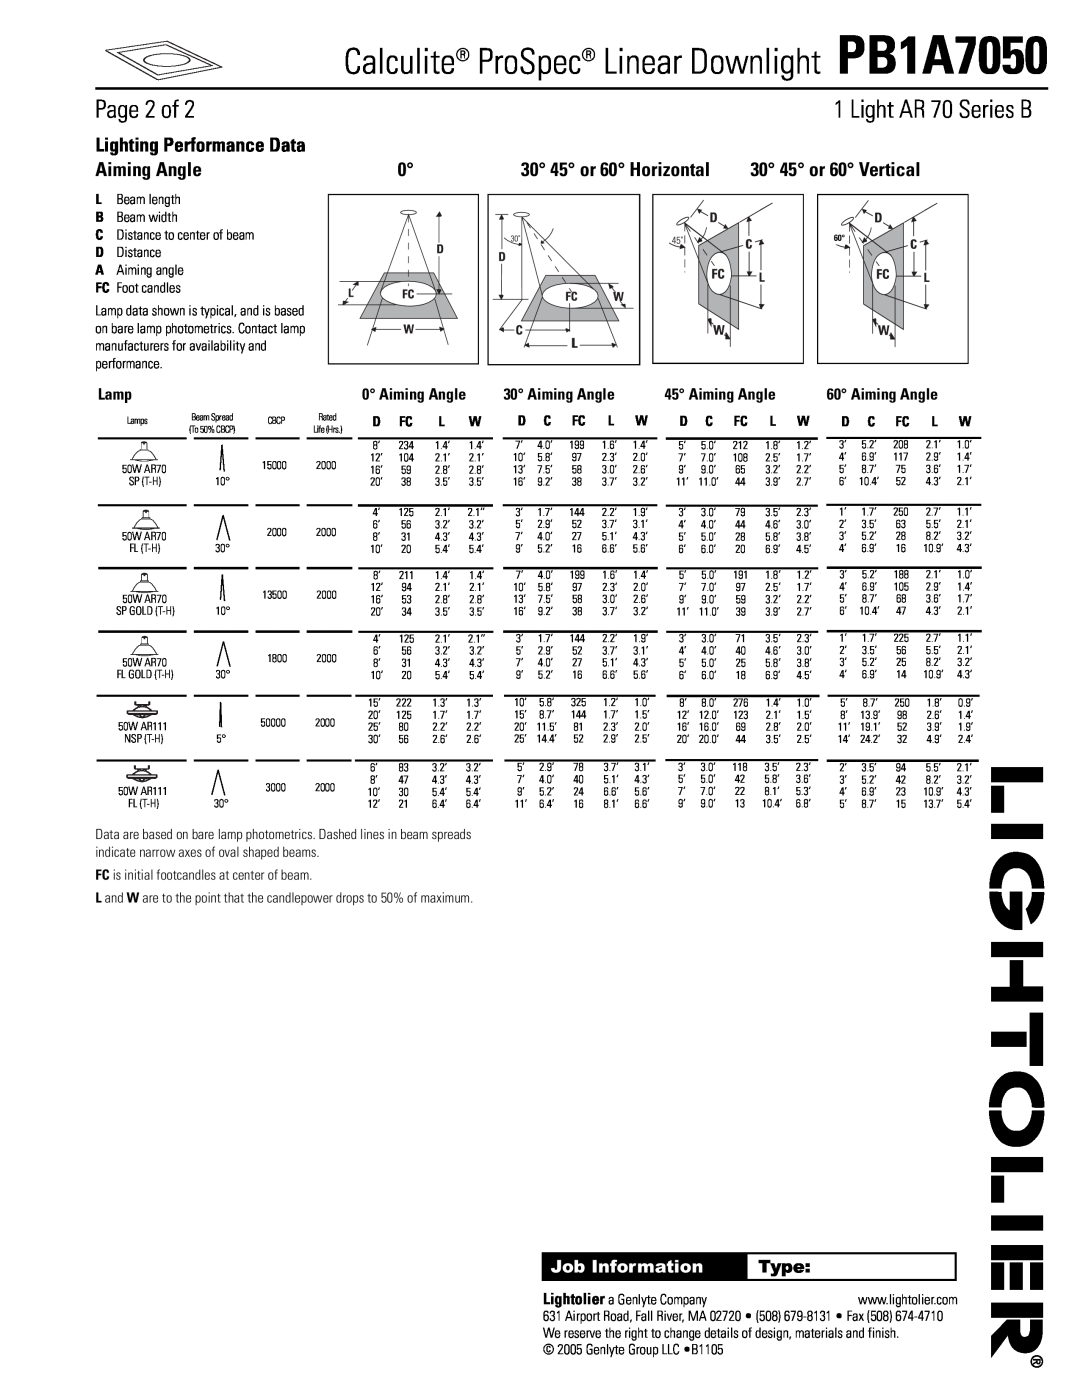 Lightolier PB1A7050 Page 2 of, Lighting Performance Data, Aiming Angle, 30 45 or 60 Horizontal, Light AR 70 Series B, Type 